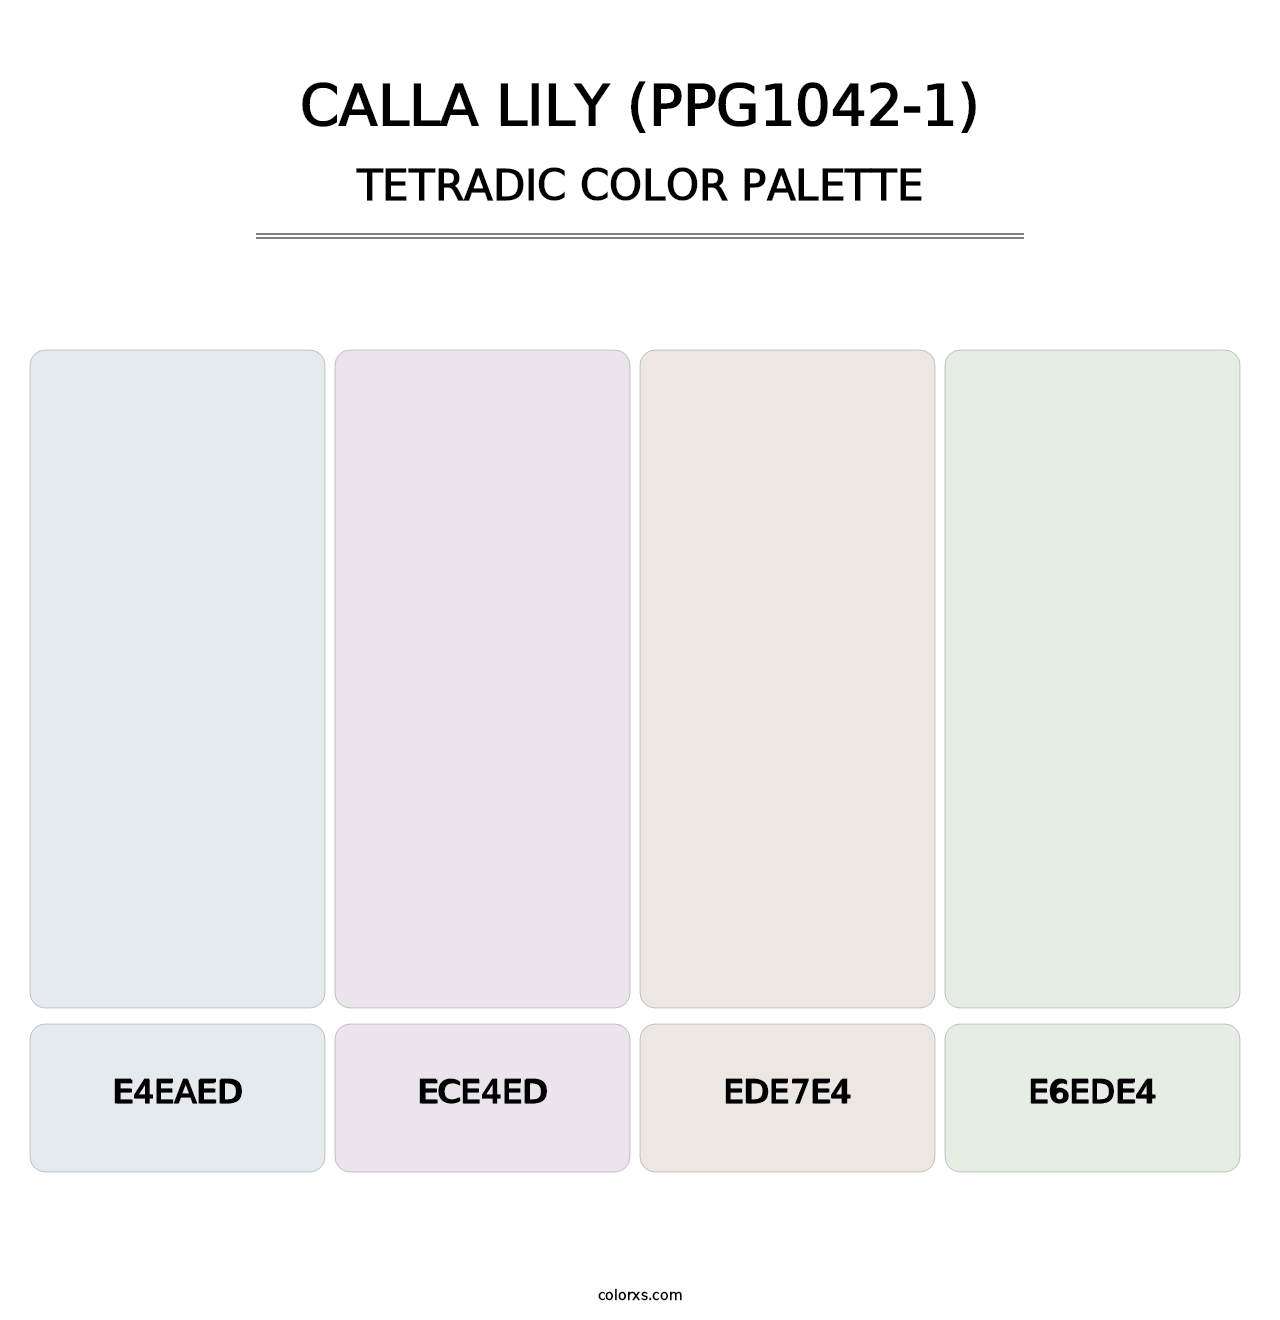 Calla Lily (PPG1042-1) - Tetradic Color Palette